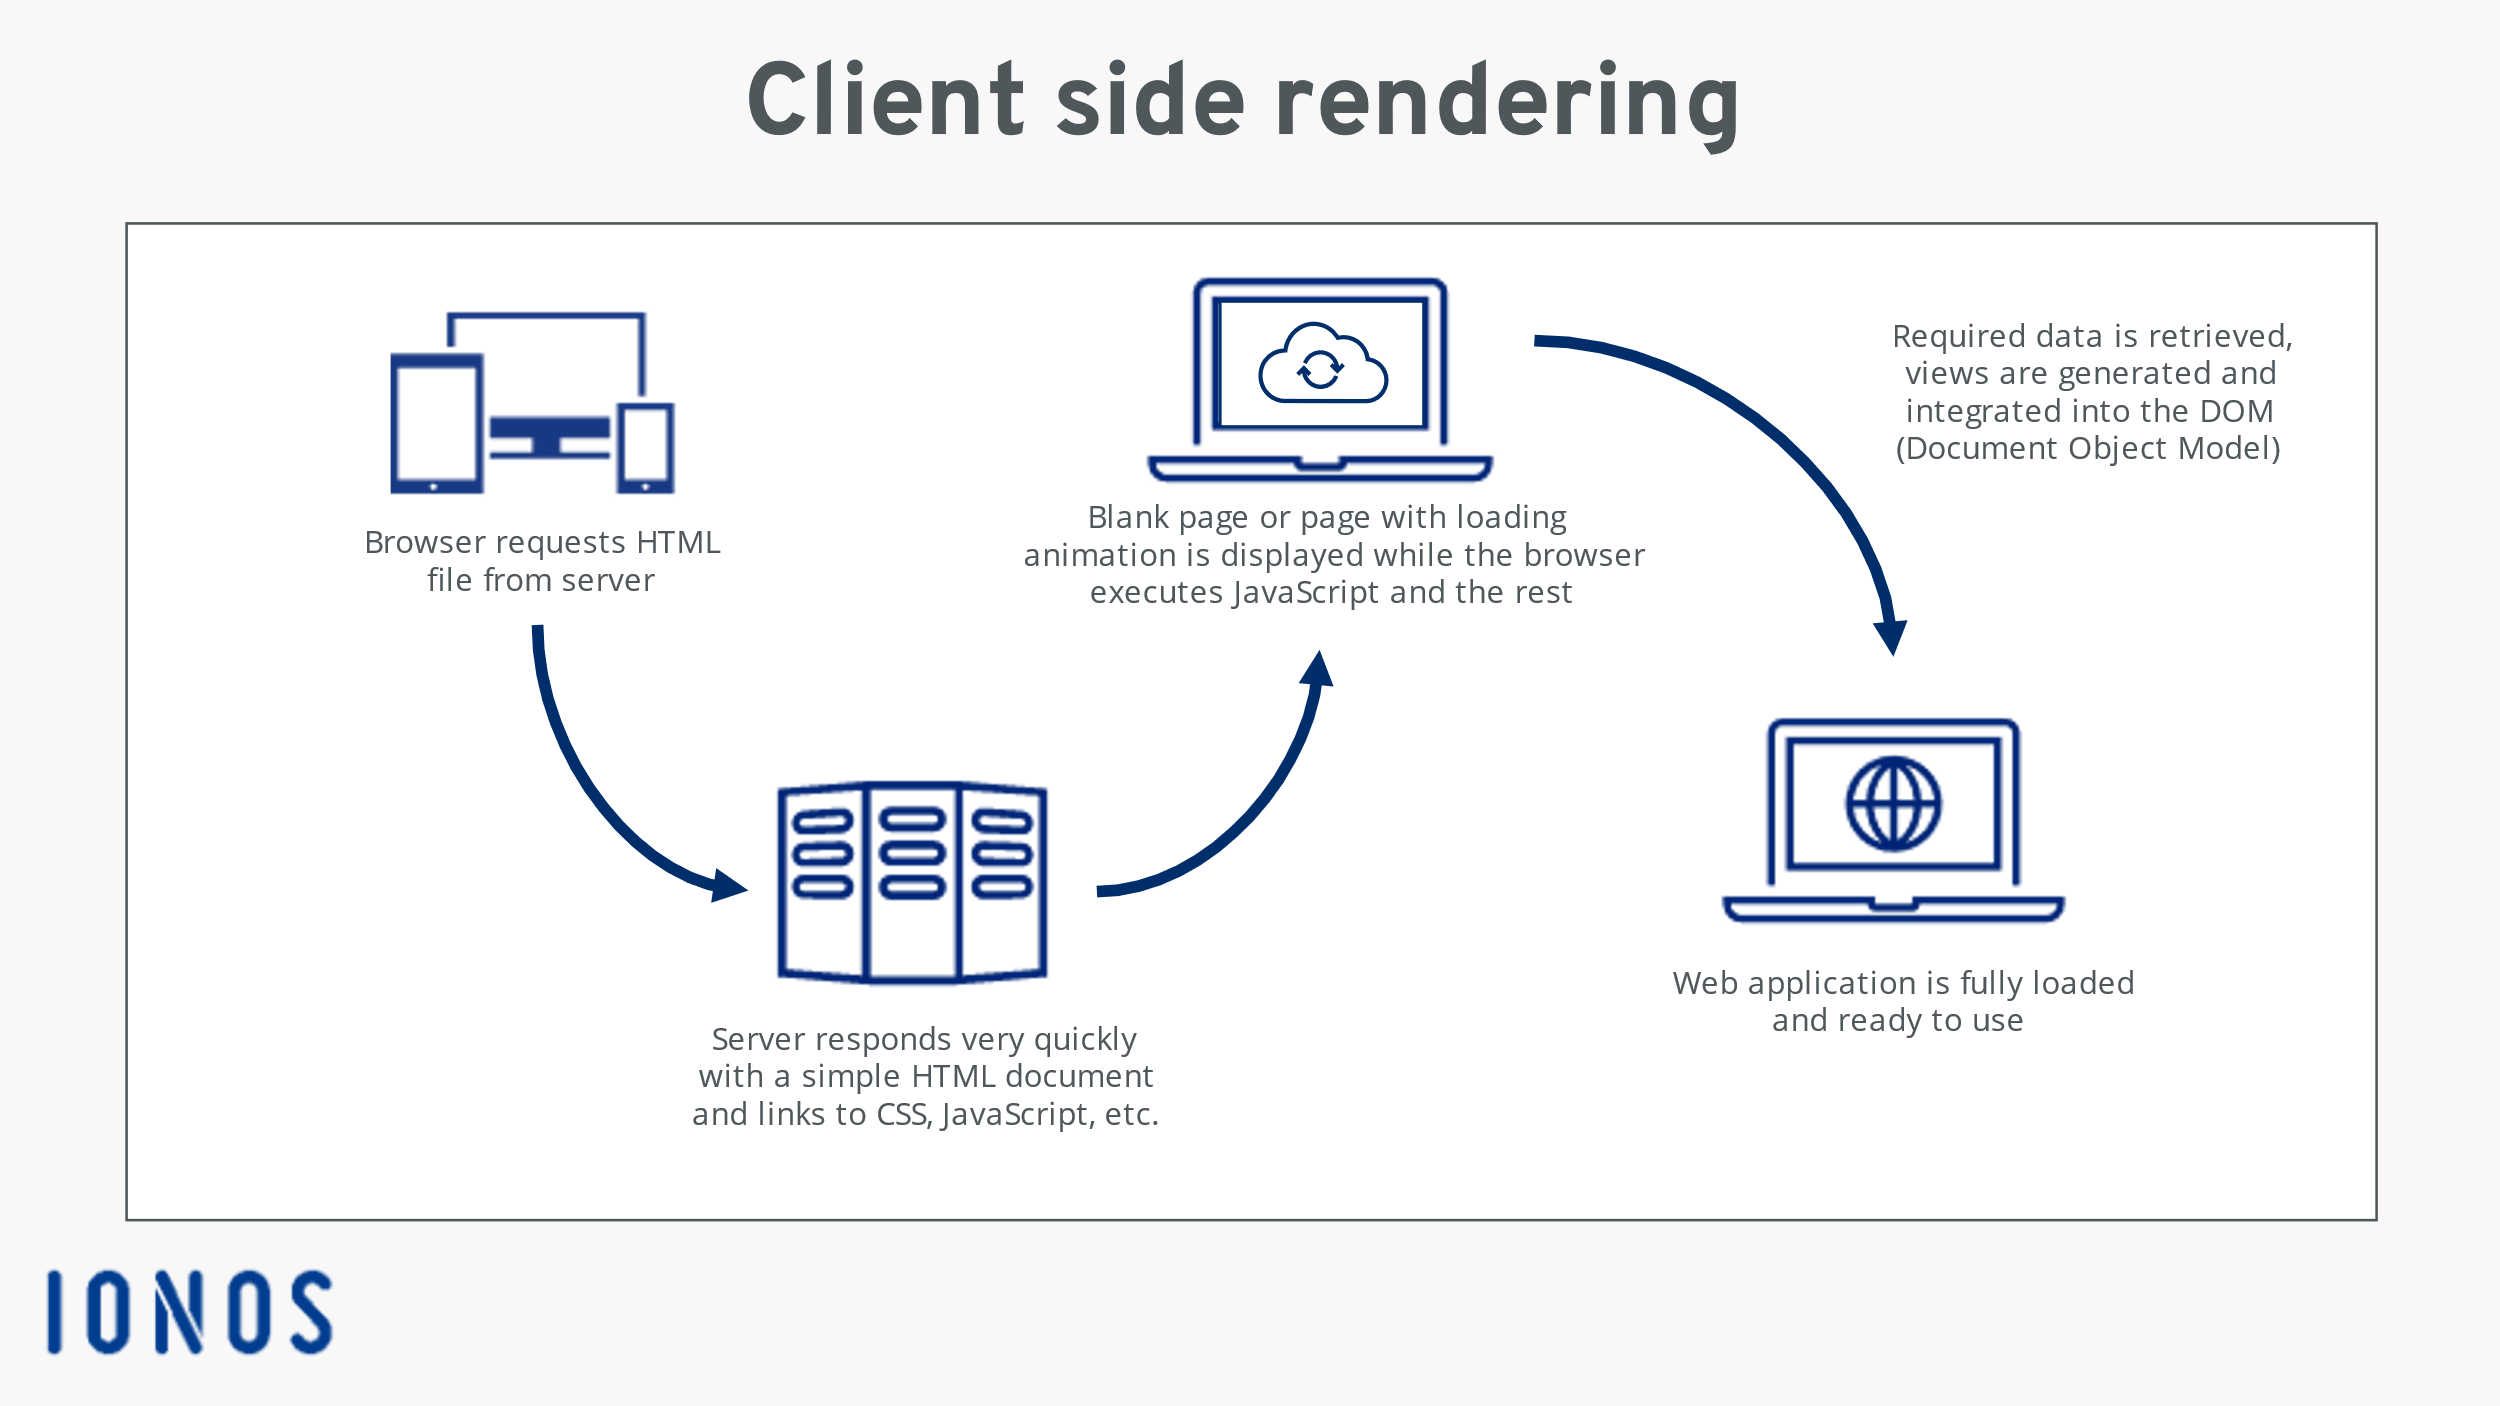 Client side rendering diagram